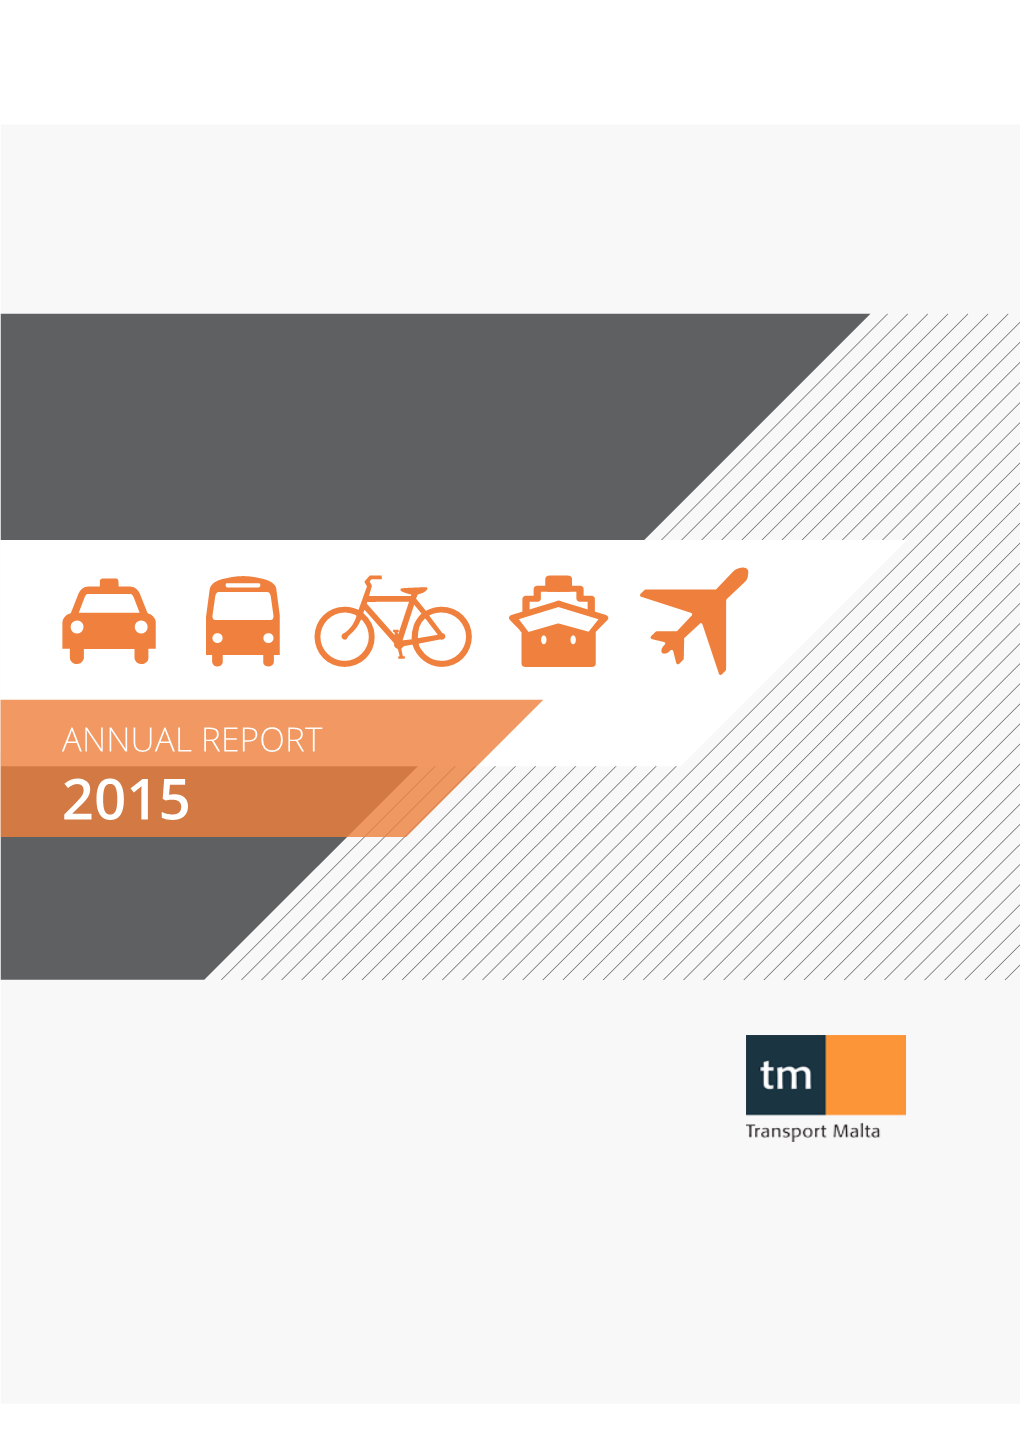 ANNUAL REPORT 2015 Transport Malta Annual Report 2015